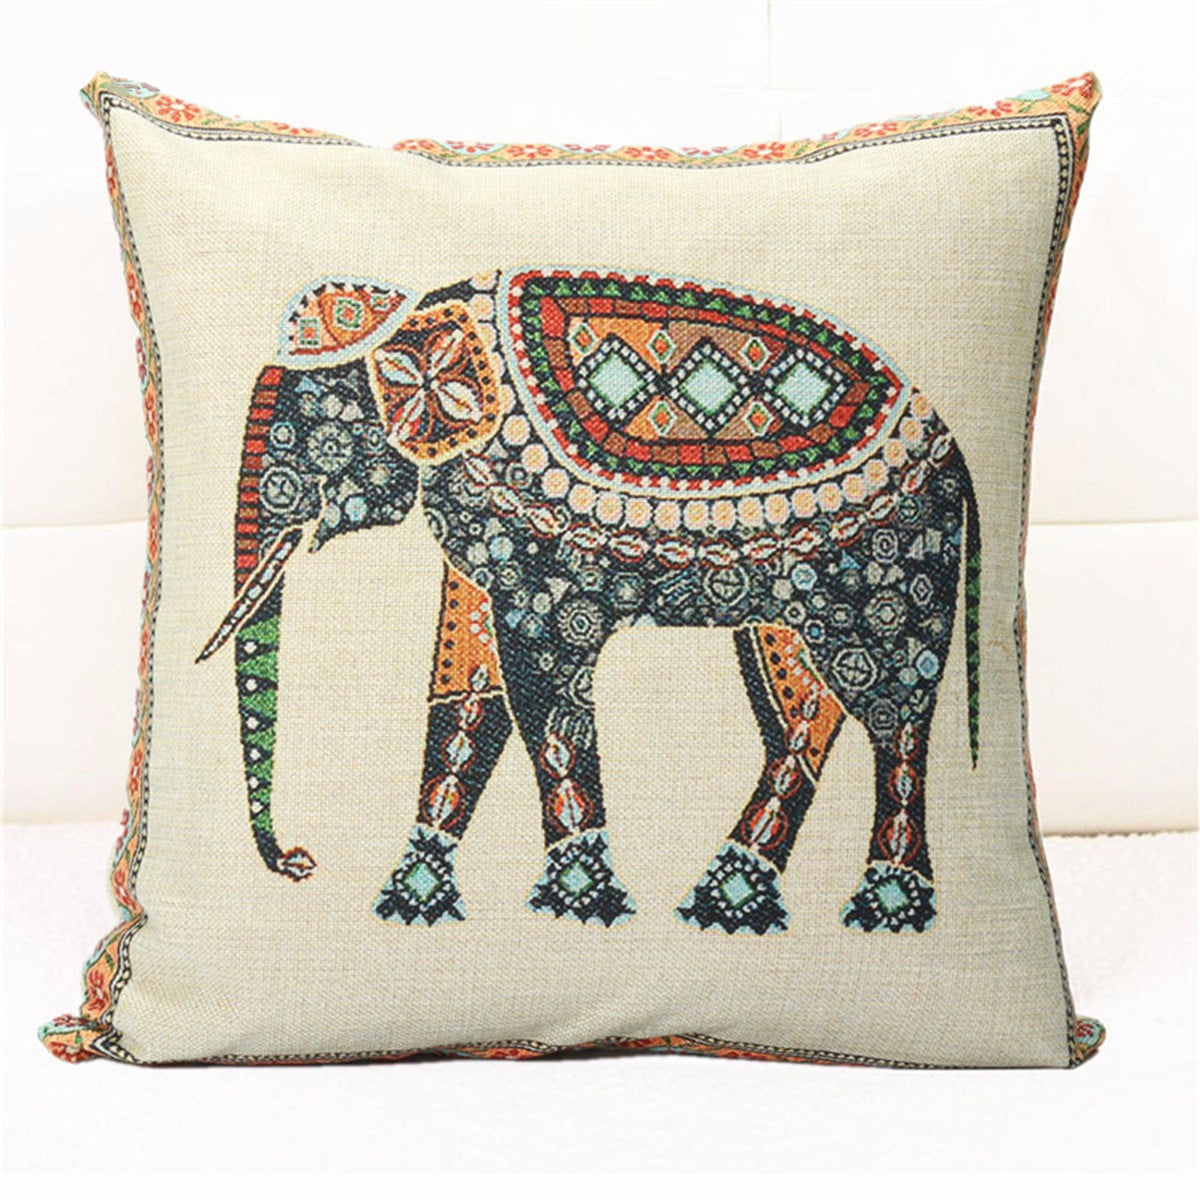 New Indian Multi Elephant Mandala Square Floor Pillow Case Cushion Cover Dog Bed